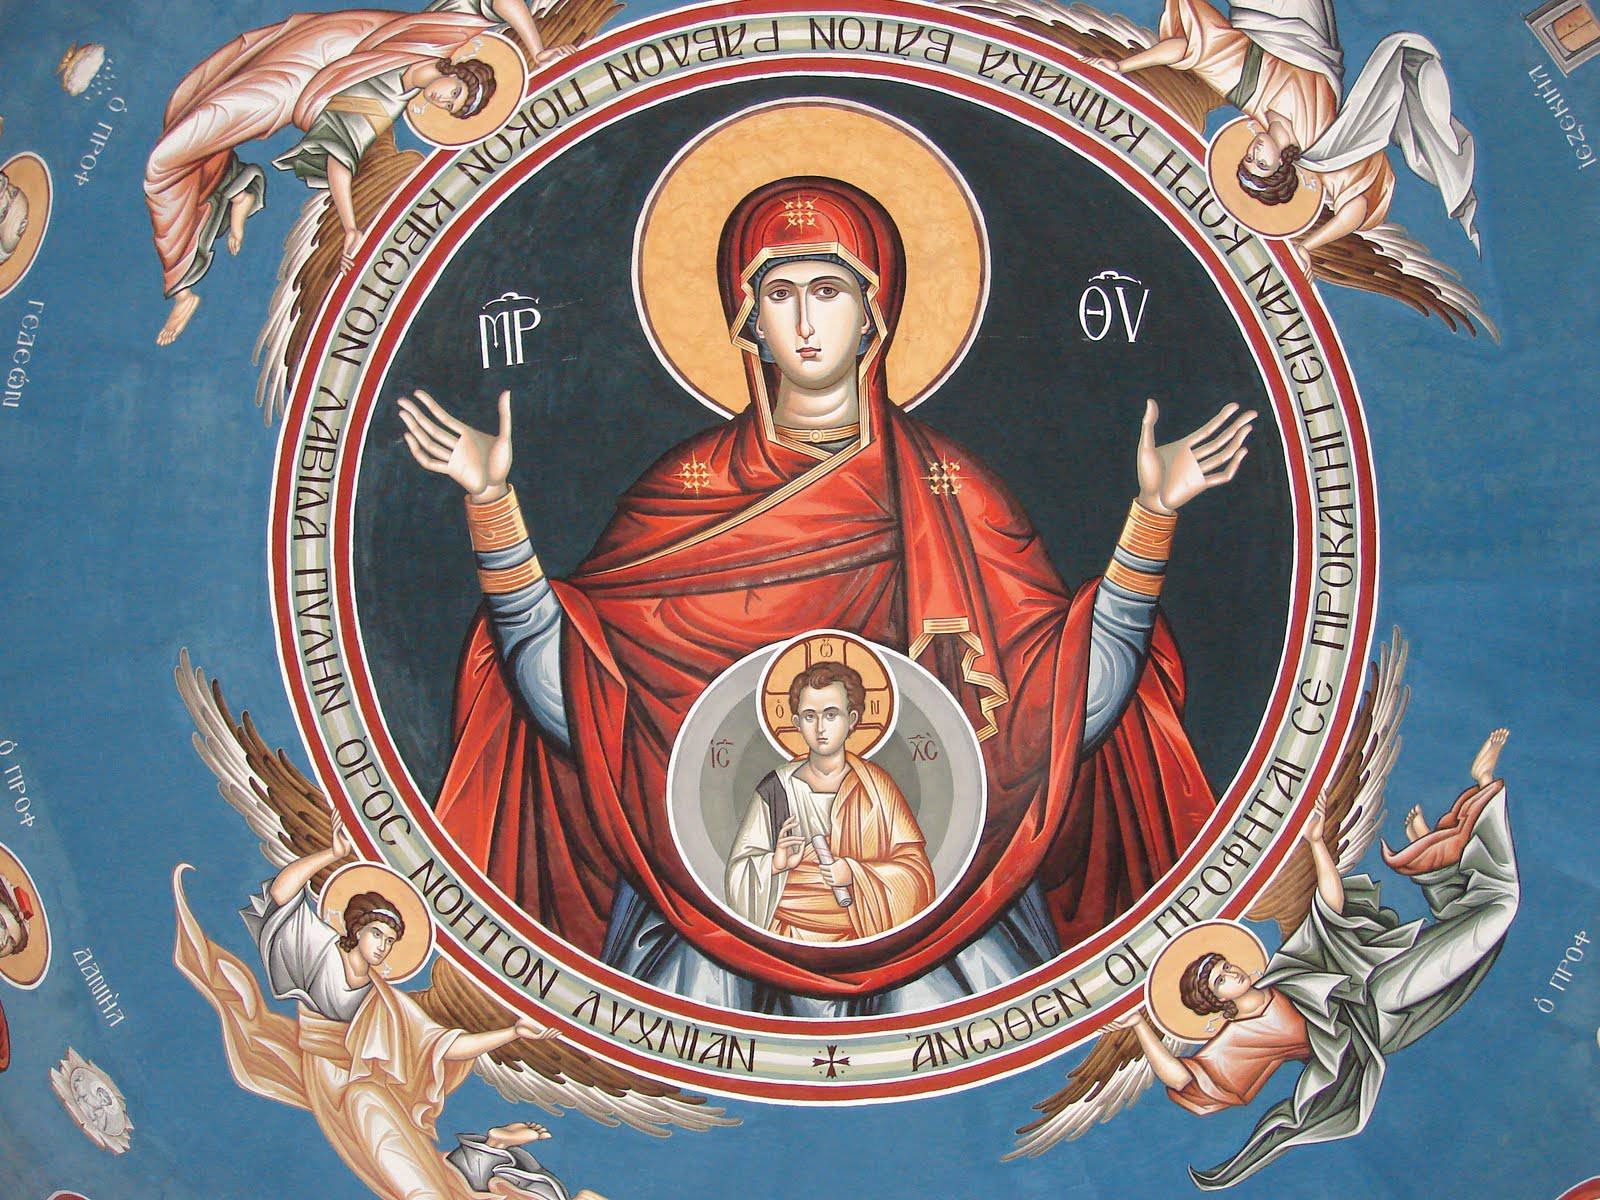 Santa Maria, donna che serve Dio e i fratelli